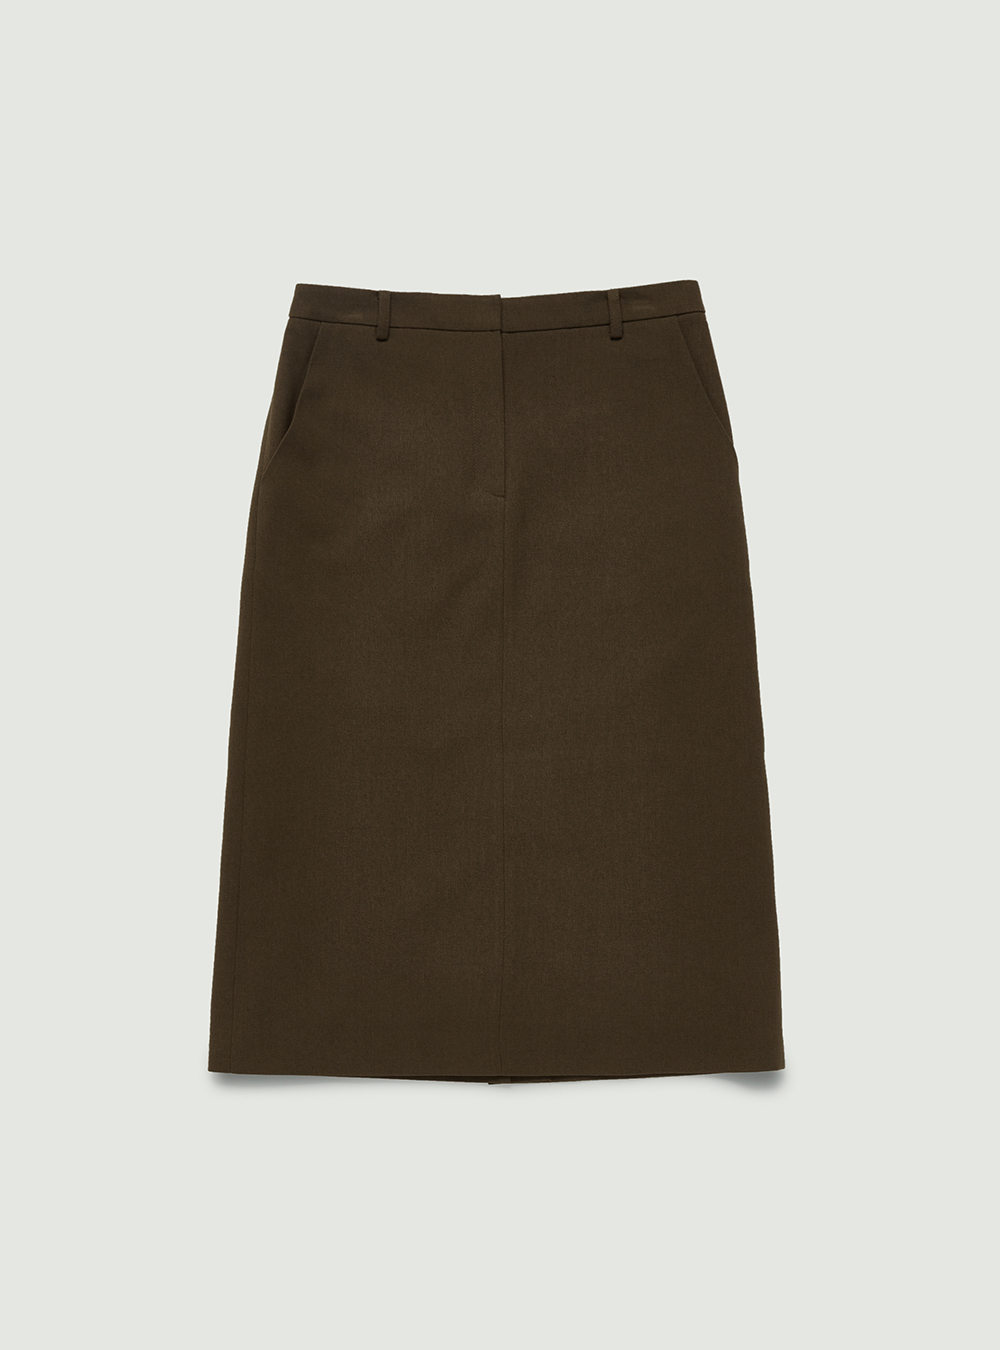 Classic midi skirt. Brown